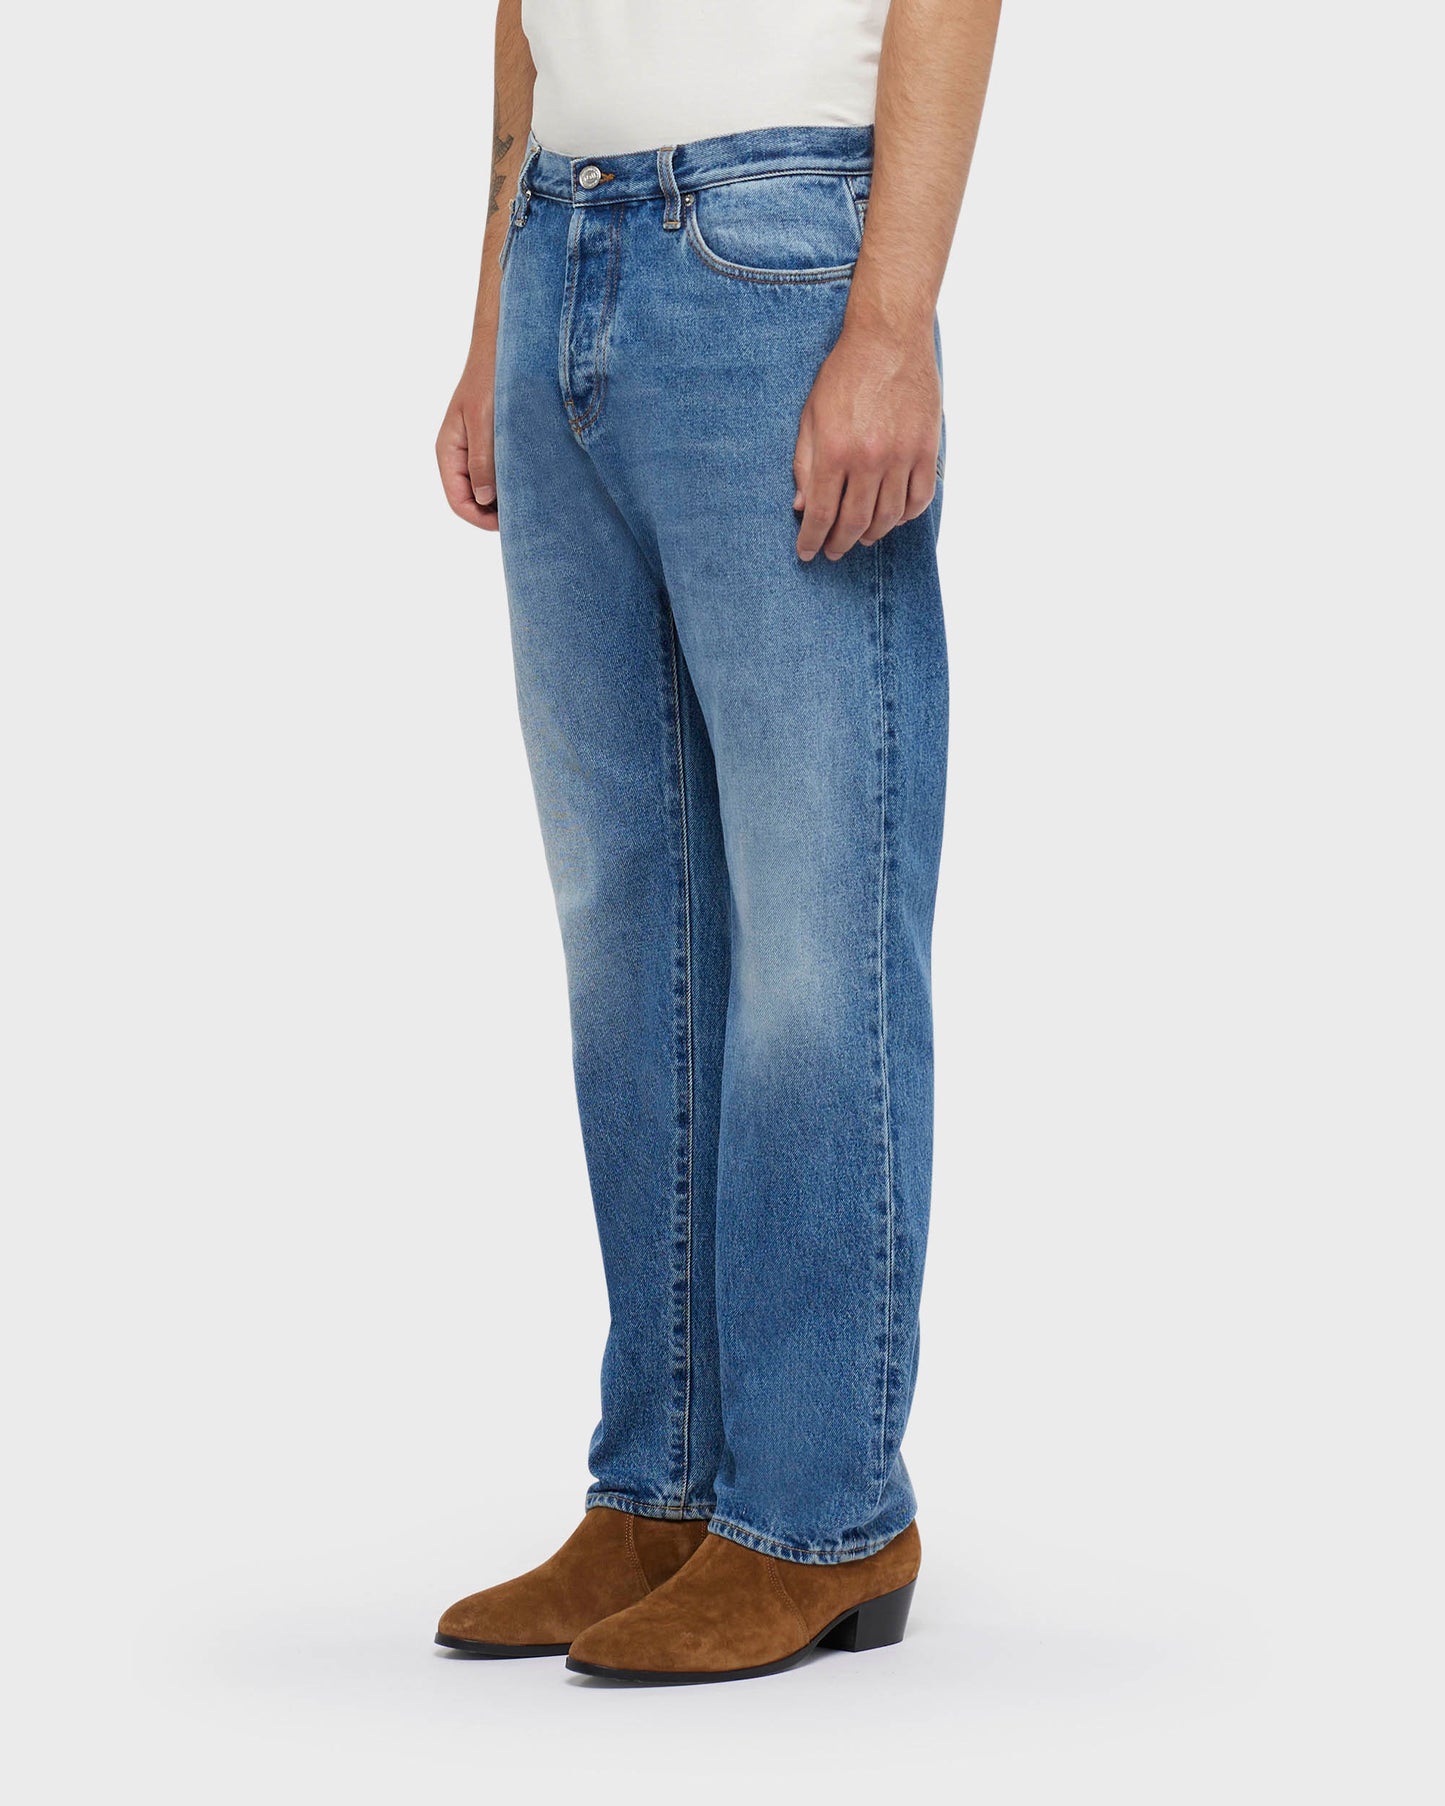 Bowl straight-leg jeans